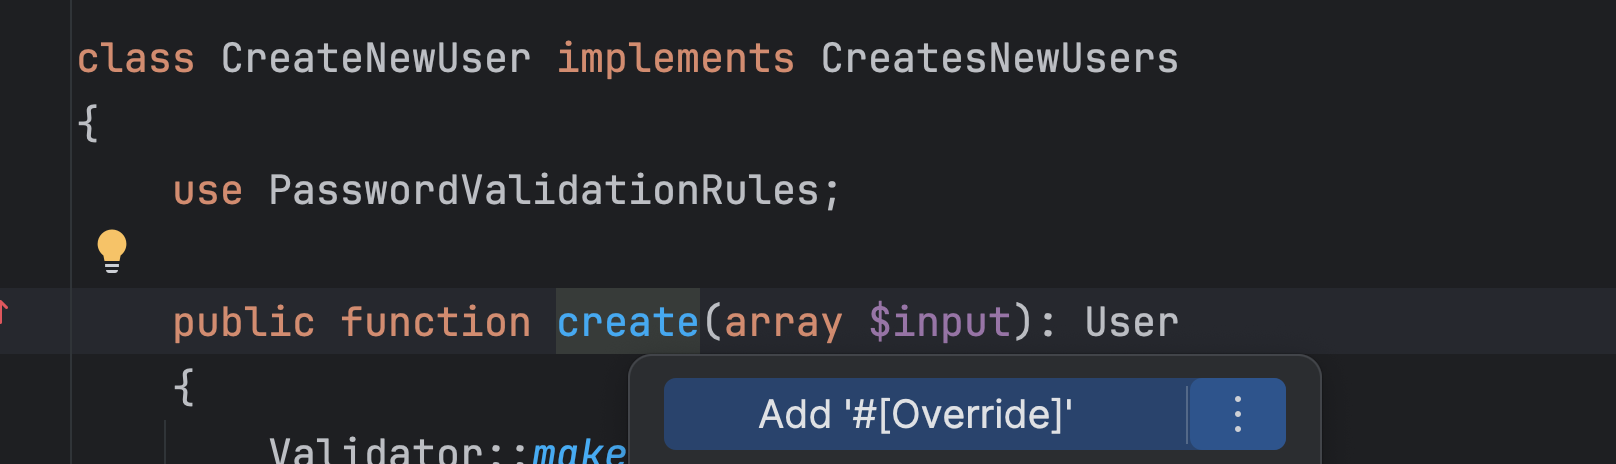 Adding Override attribute suggestion